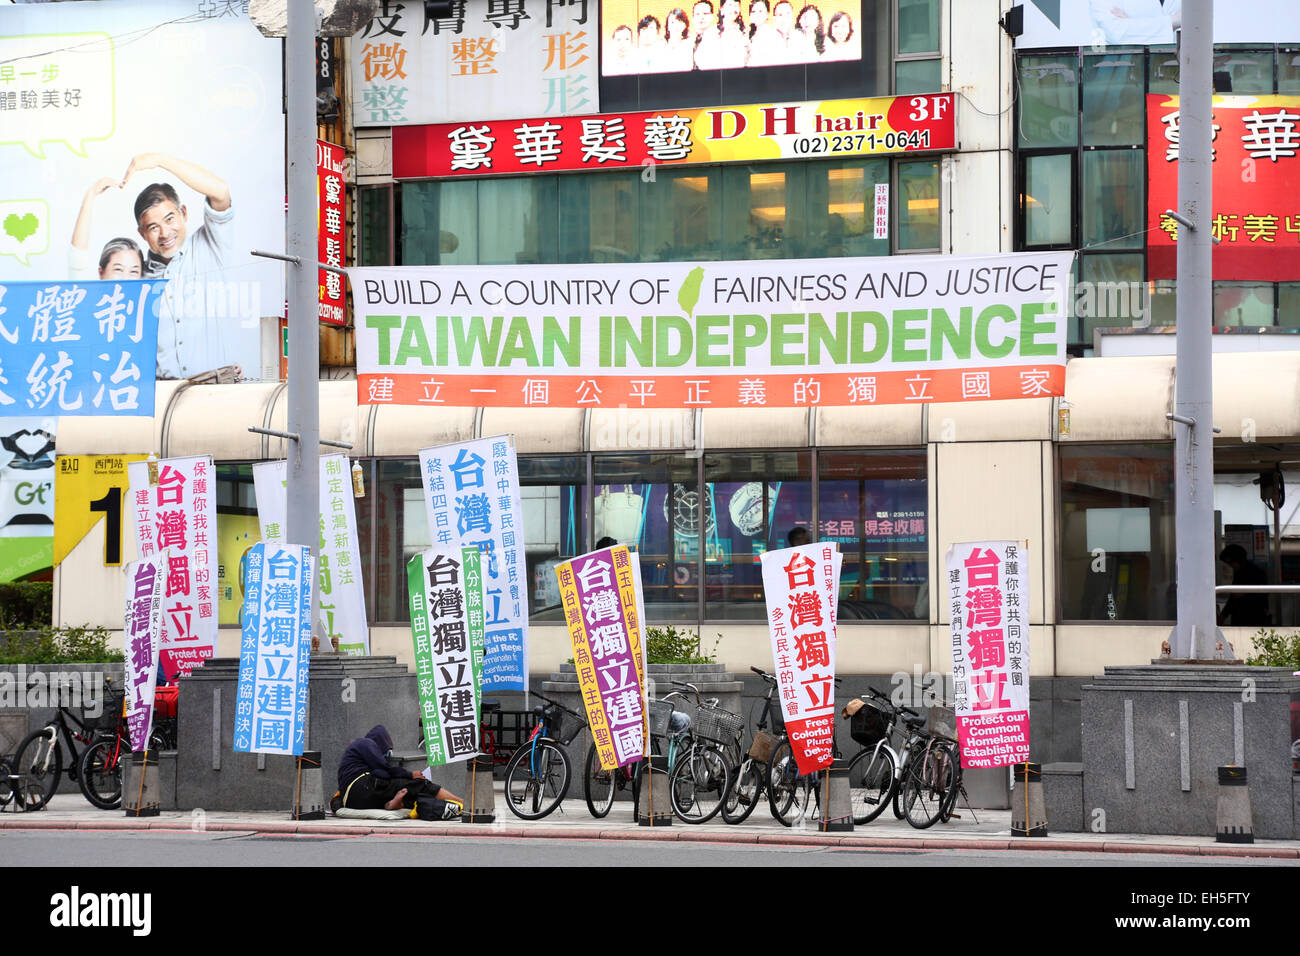 Pancartas de protesta en una manifestación pro independencia de Taiwán, Ximen, Taipei, Taiwán. Foto de stock